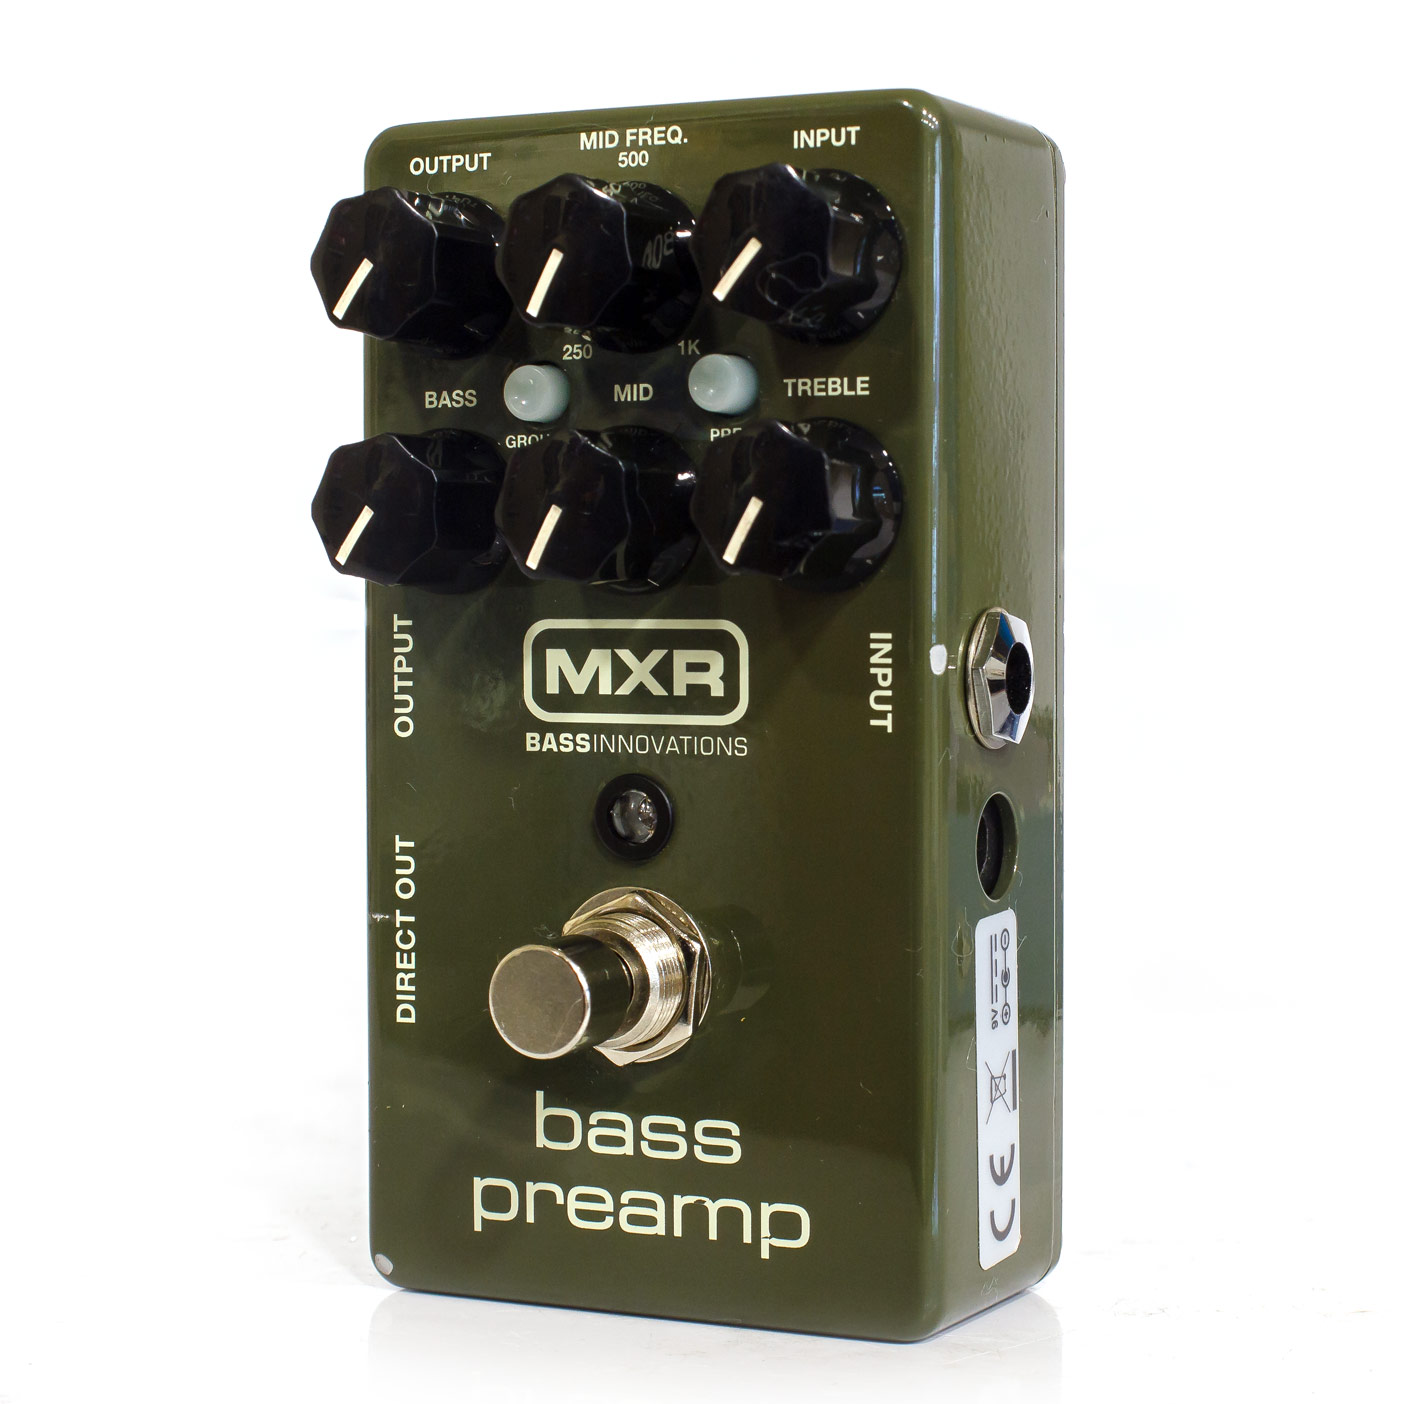 Bass preamp. MXR бас преамп. MXR Bass preamp. MXR m81 Bass preamp инструкция. Bass onboard preamp Clevan manual.